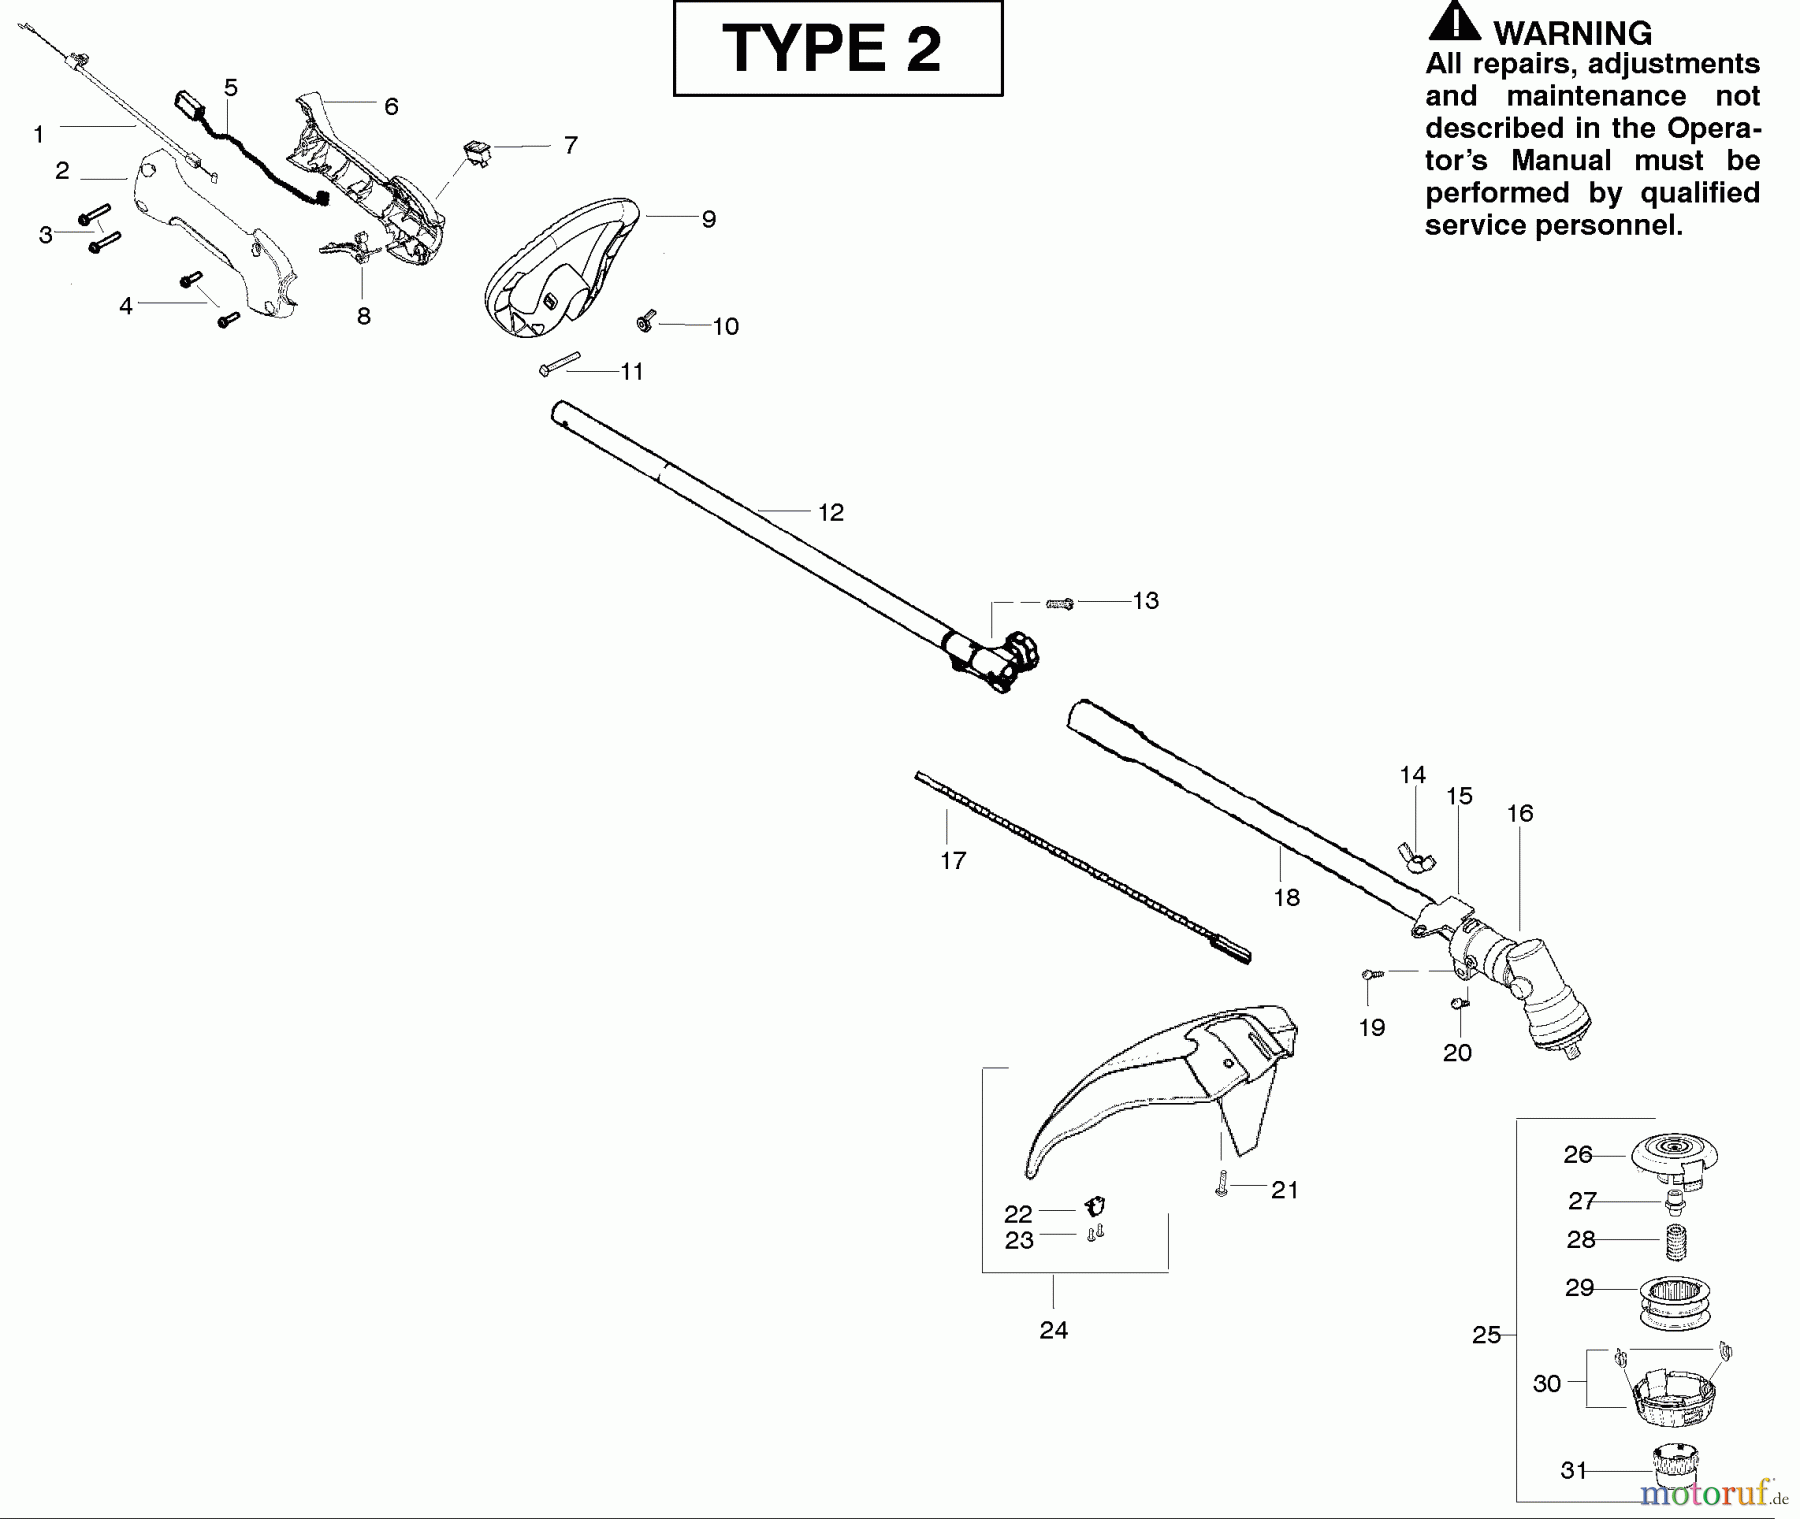  Poulan / Weed Eater Motorsensen, Trimmer PP125 (Type 2) - Poulan Pro String Trimmer Cutting Equipment Type 2